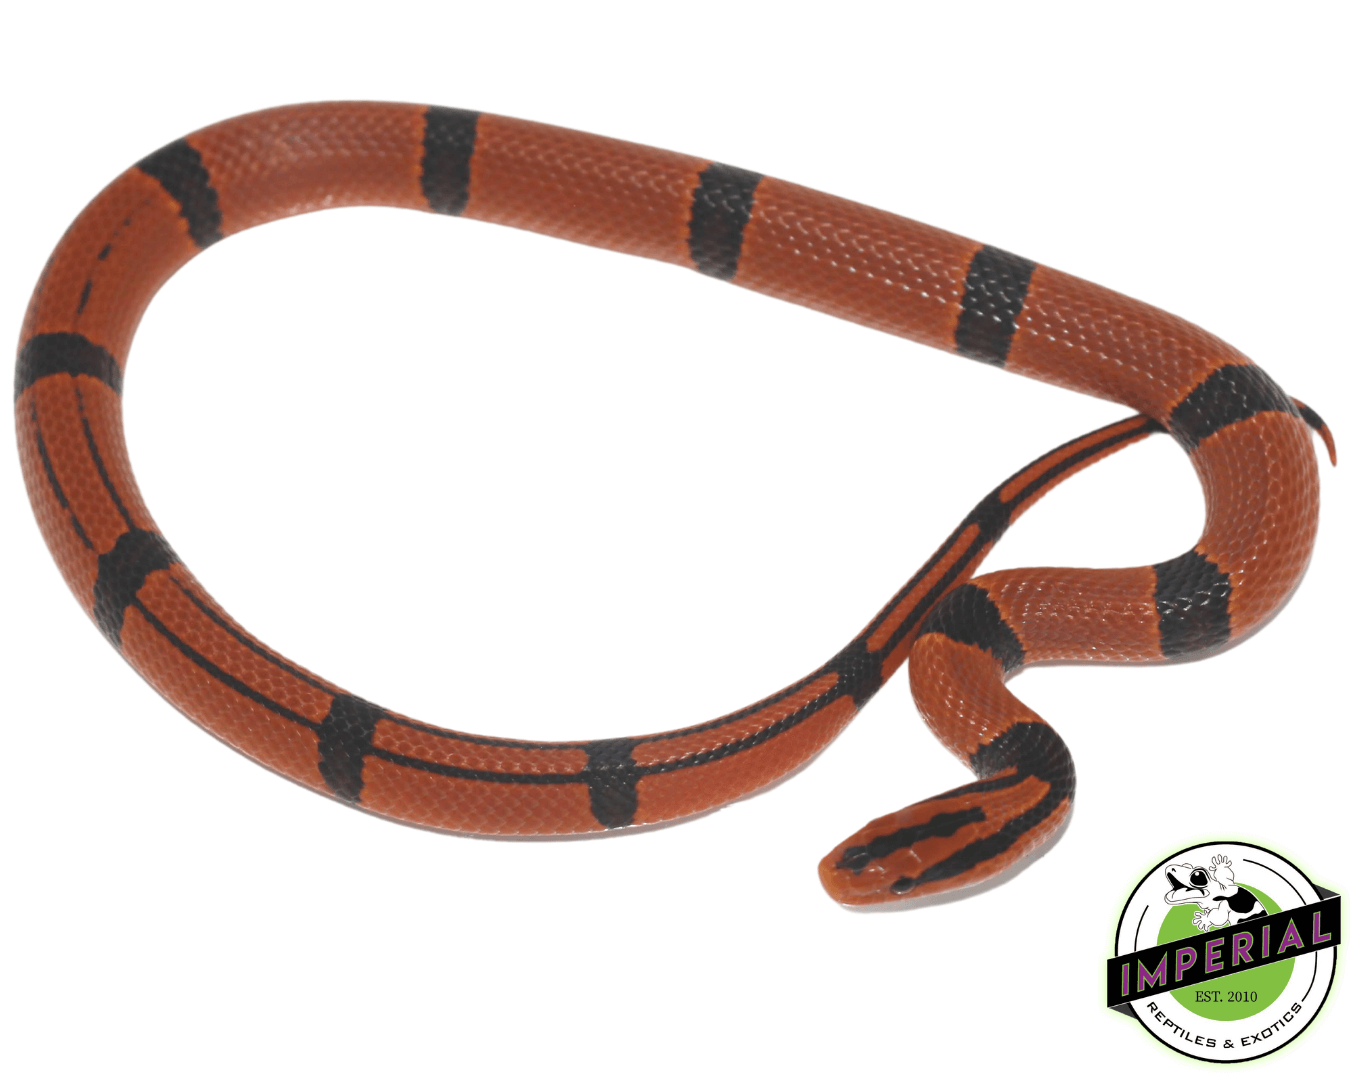 yunnan mountain rat snake for sale, buy reptiles online